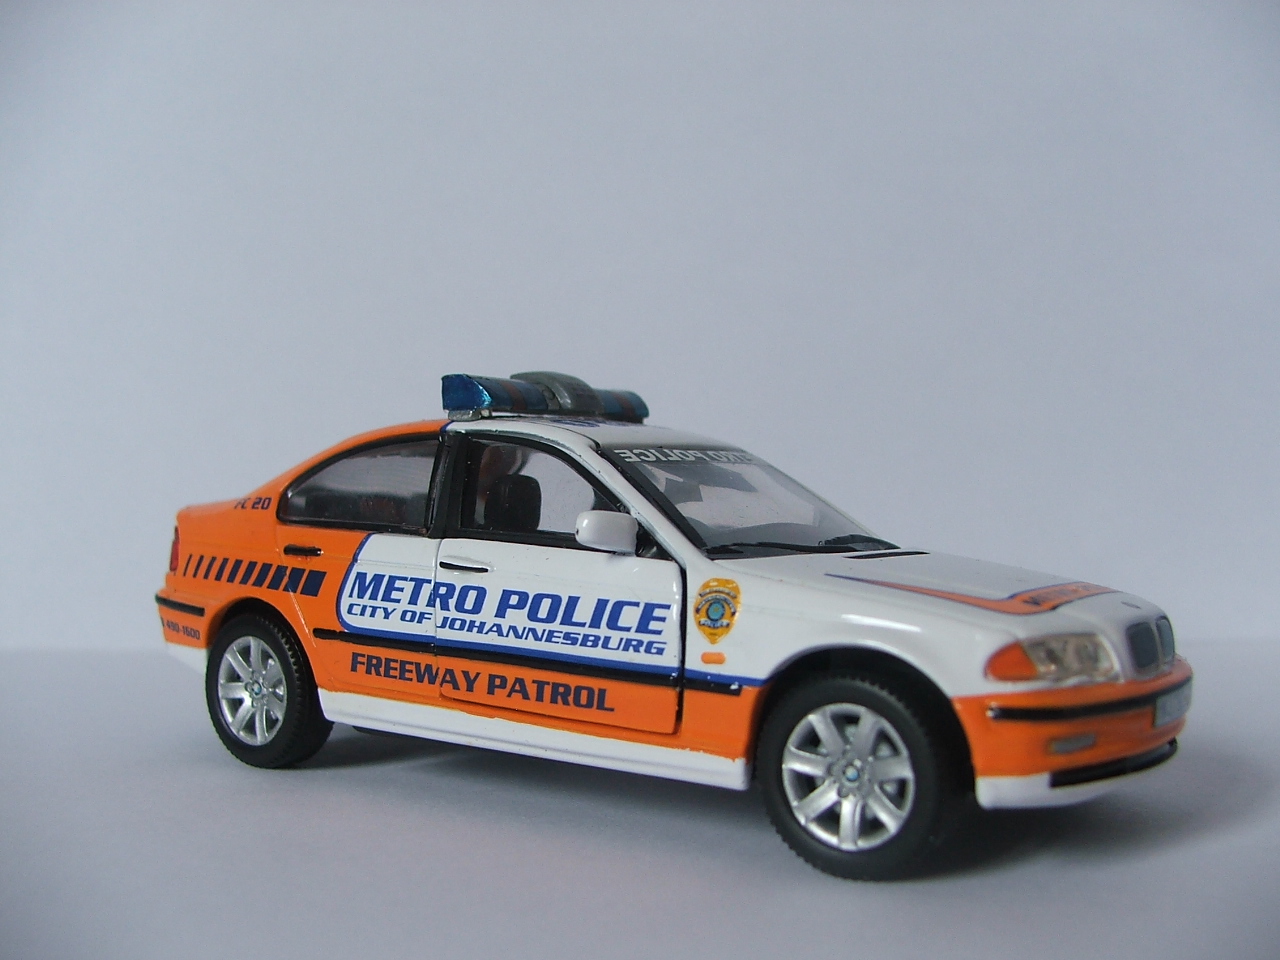 Bmw 330 Metropolitan Police Johannesburg (South Africa) | Flickr ...